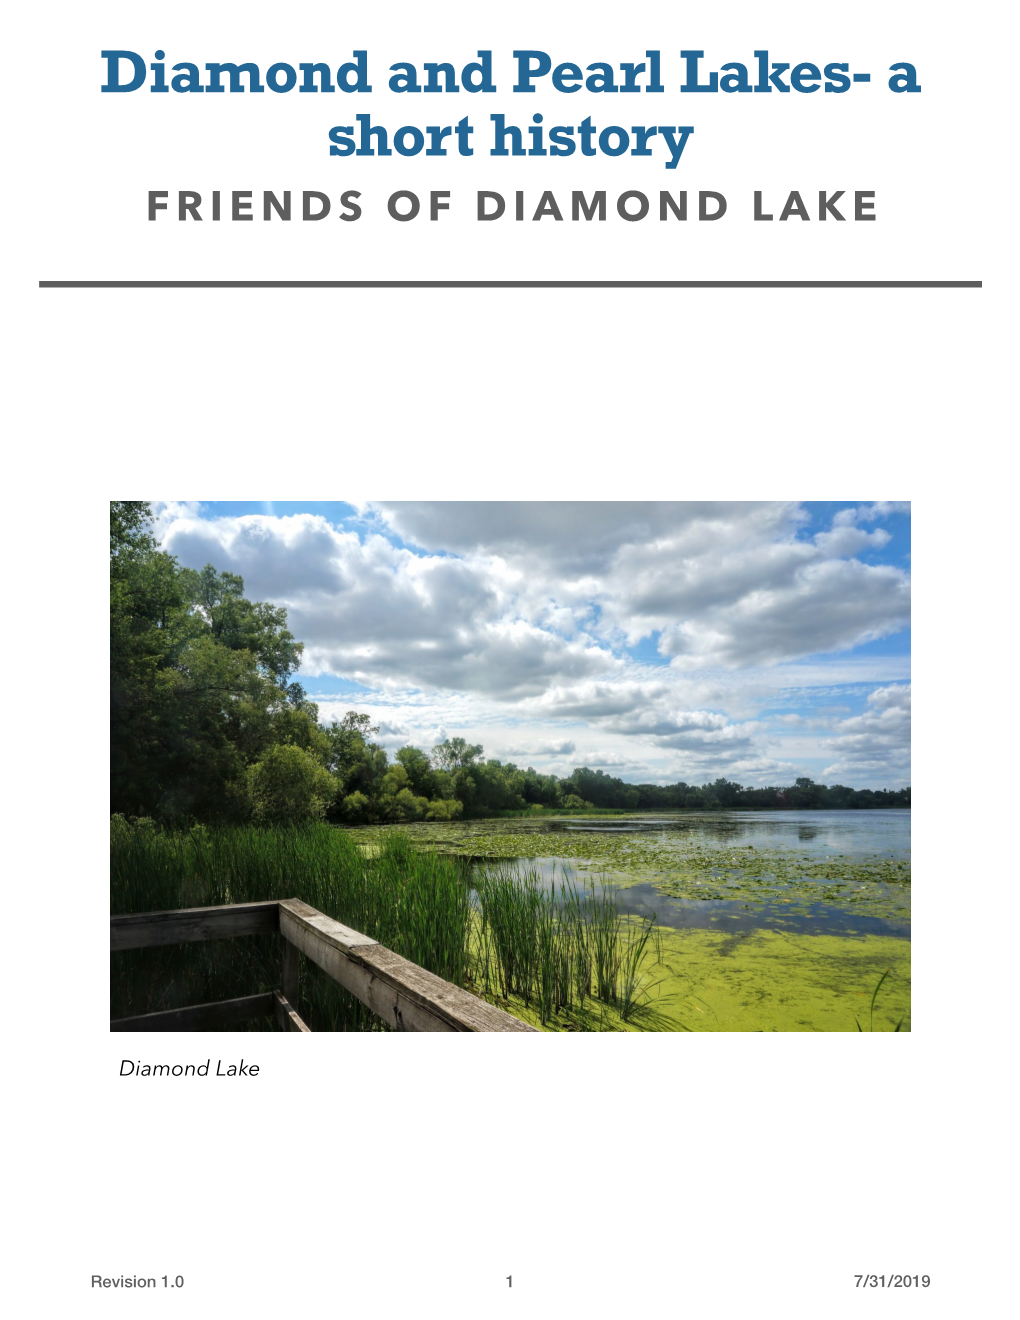 Diamond and Pearl Lakes – a Short History